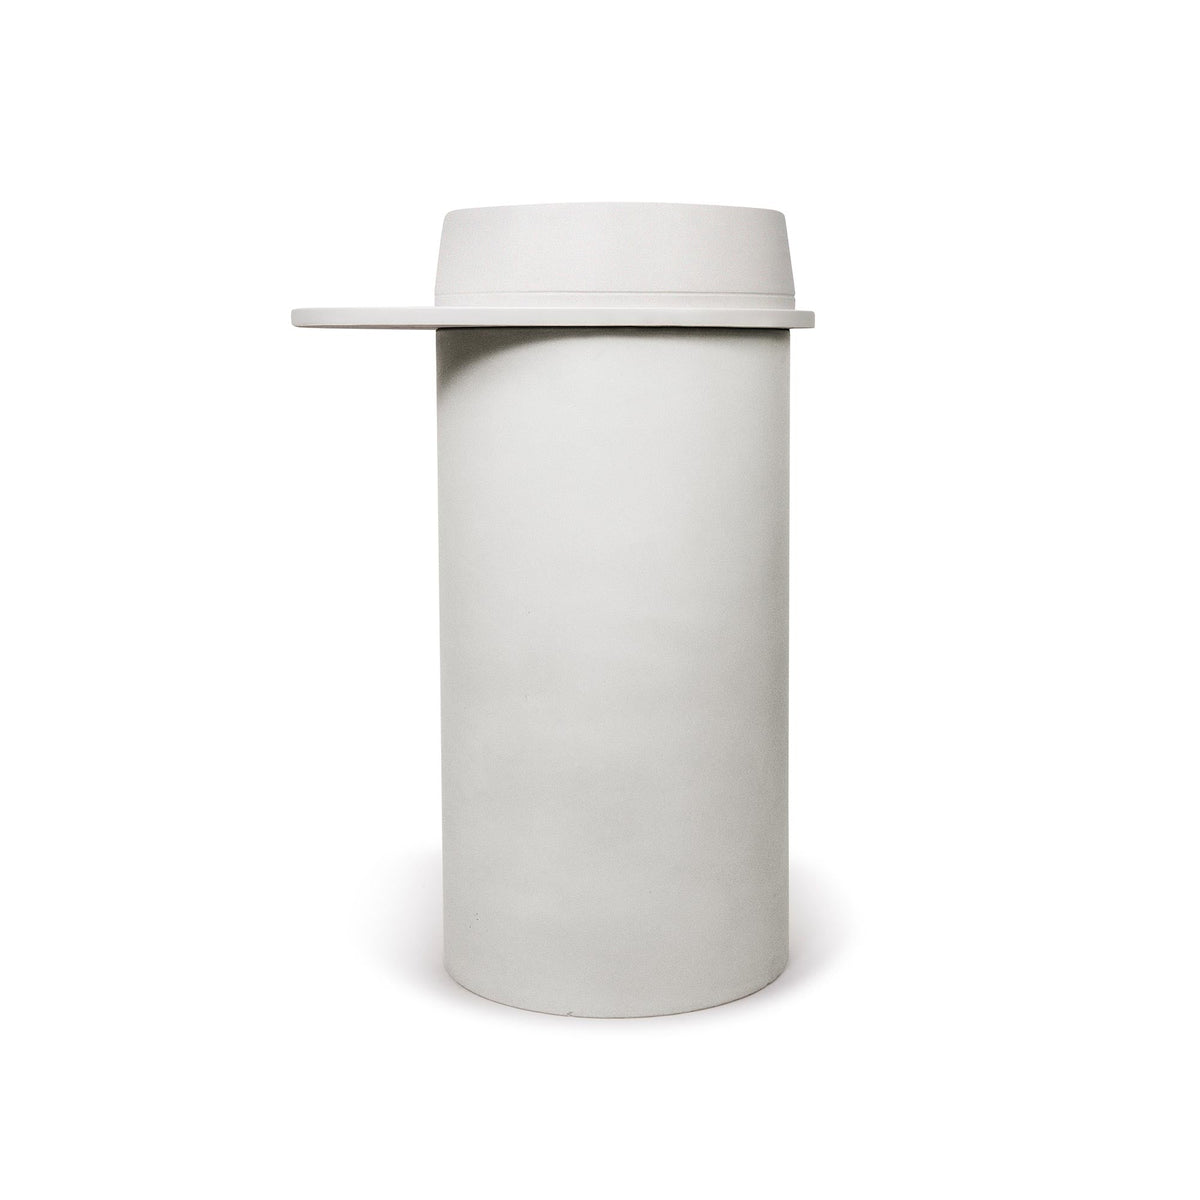 Cylinder with Tray - Funl Basin (Mint,Custard)